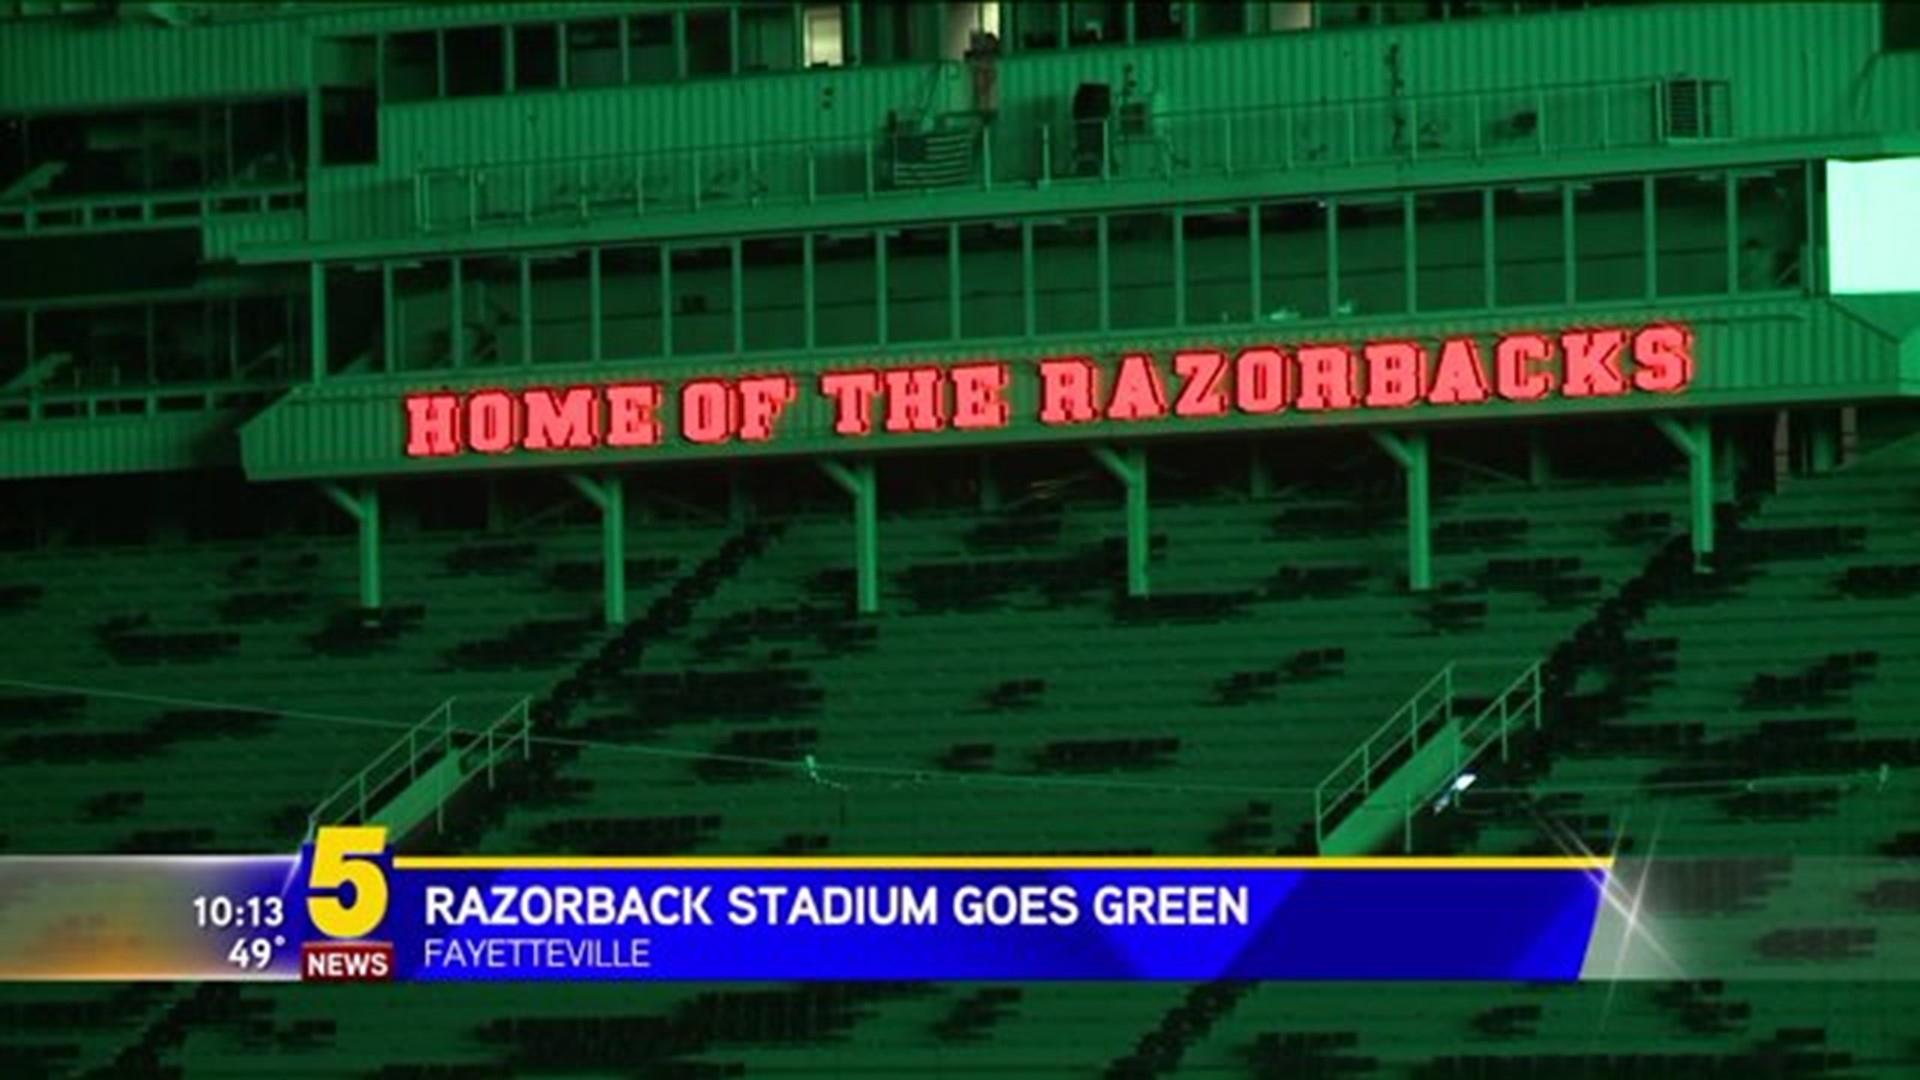 Razorback Stadium Goes Green